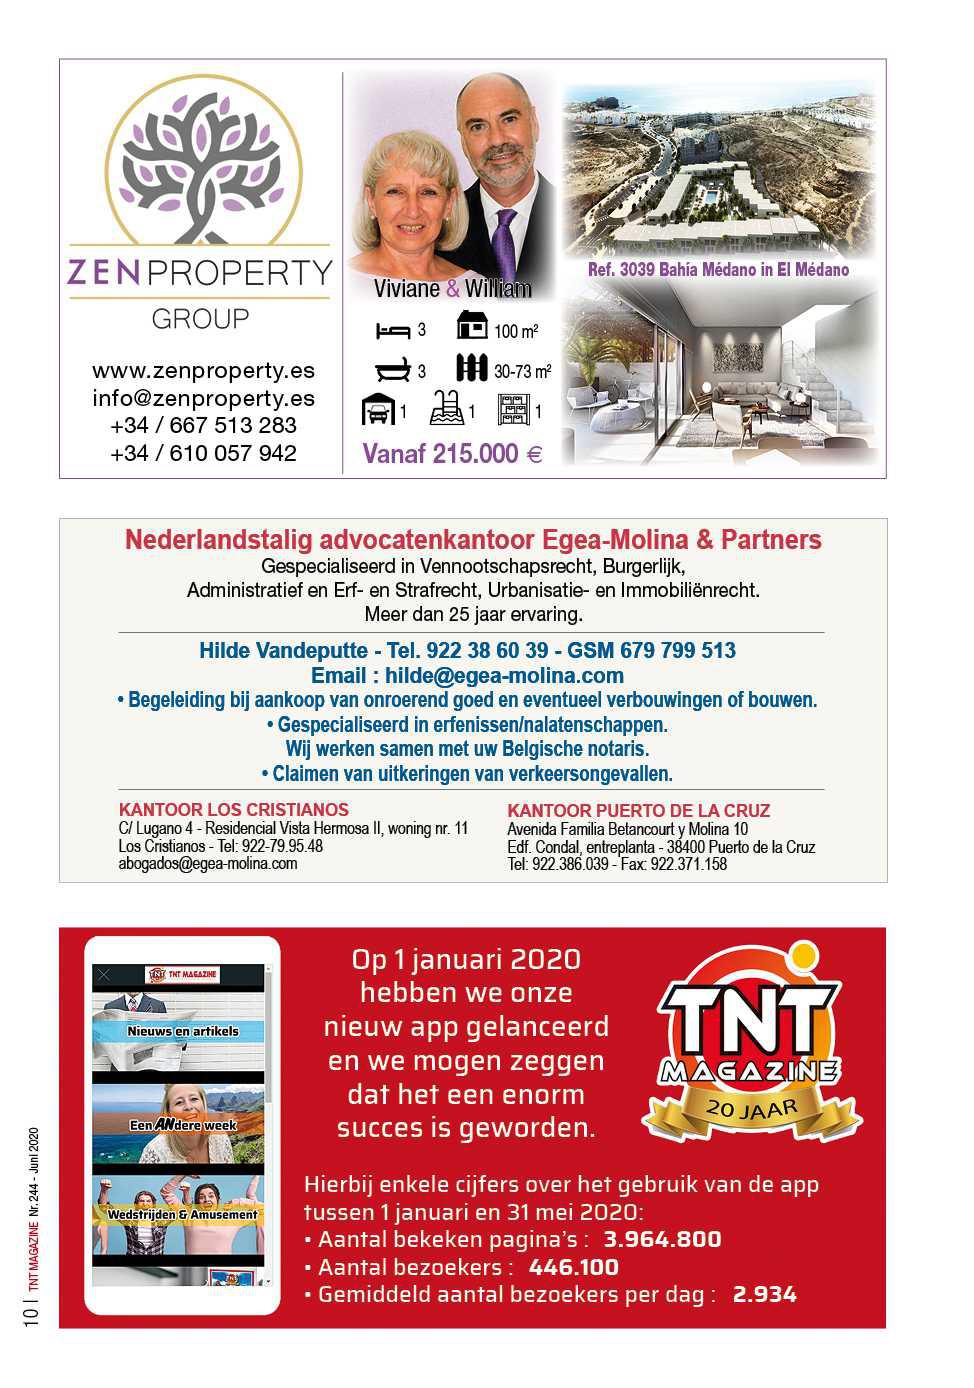 TNT Magazine - juni 2020 - digitale versie